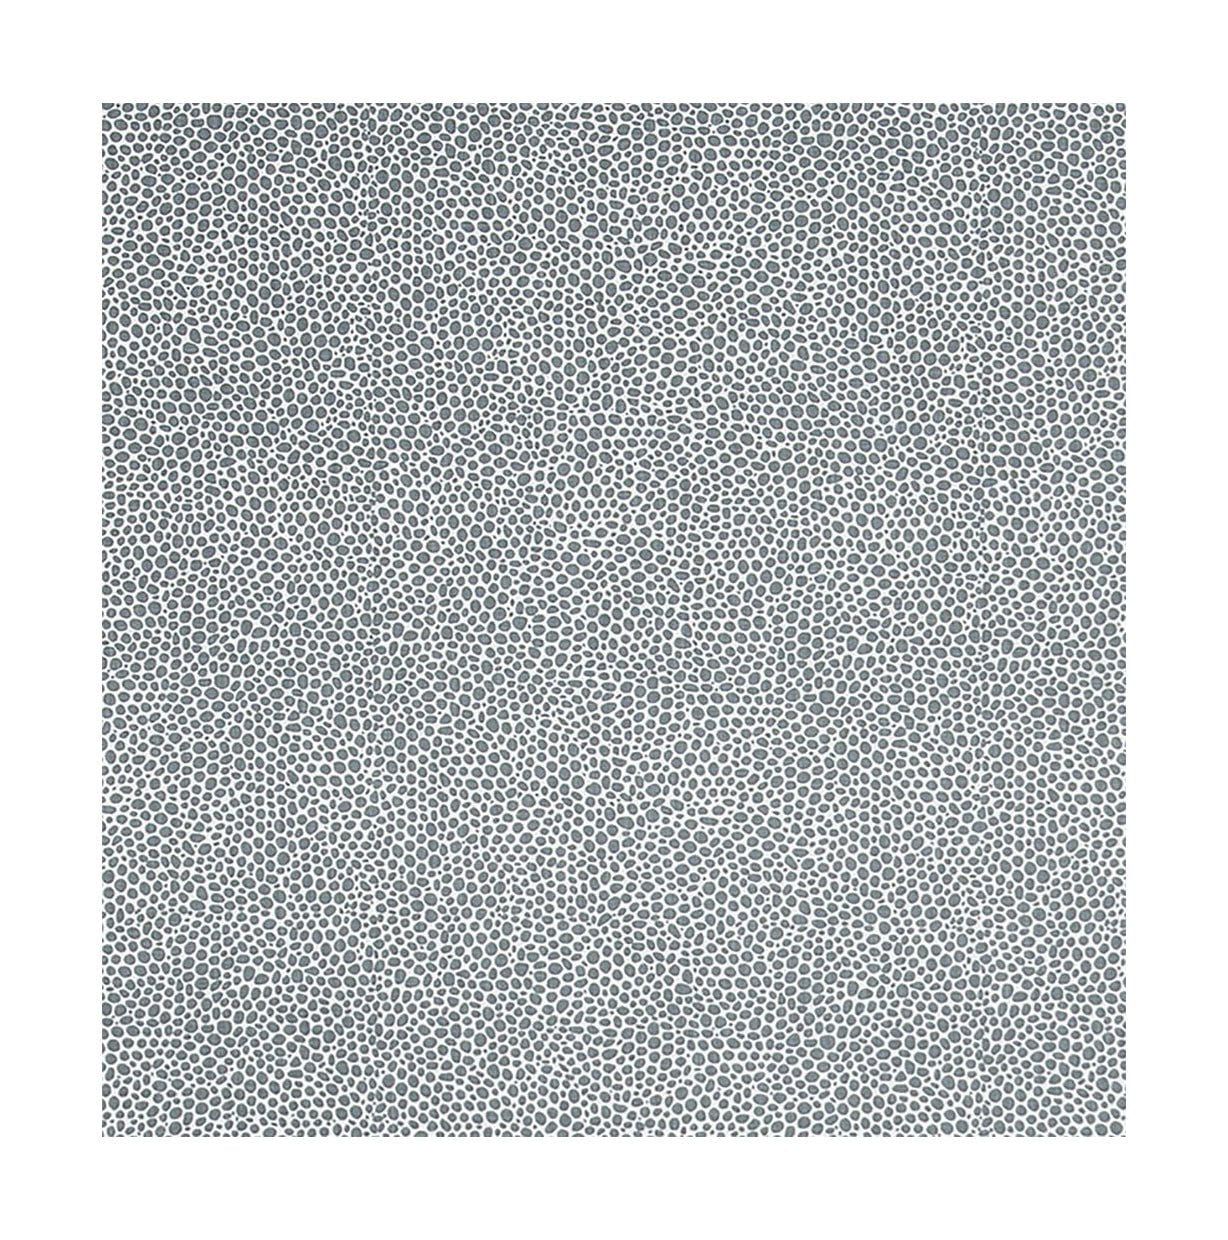 Spira Dotte CTC tkanina s akrylovou šířkou 145 cm (cena za metr), kouřová modrá